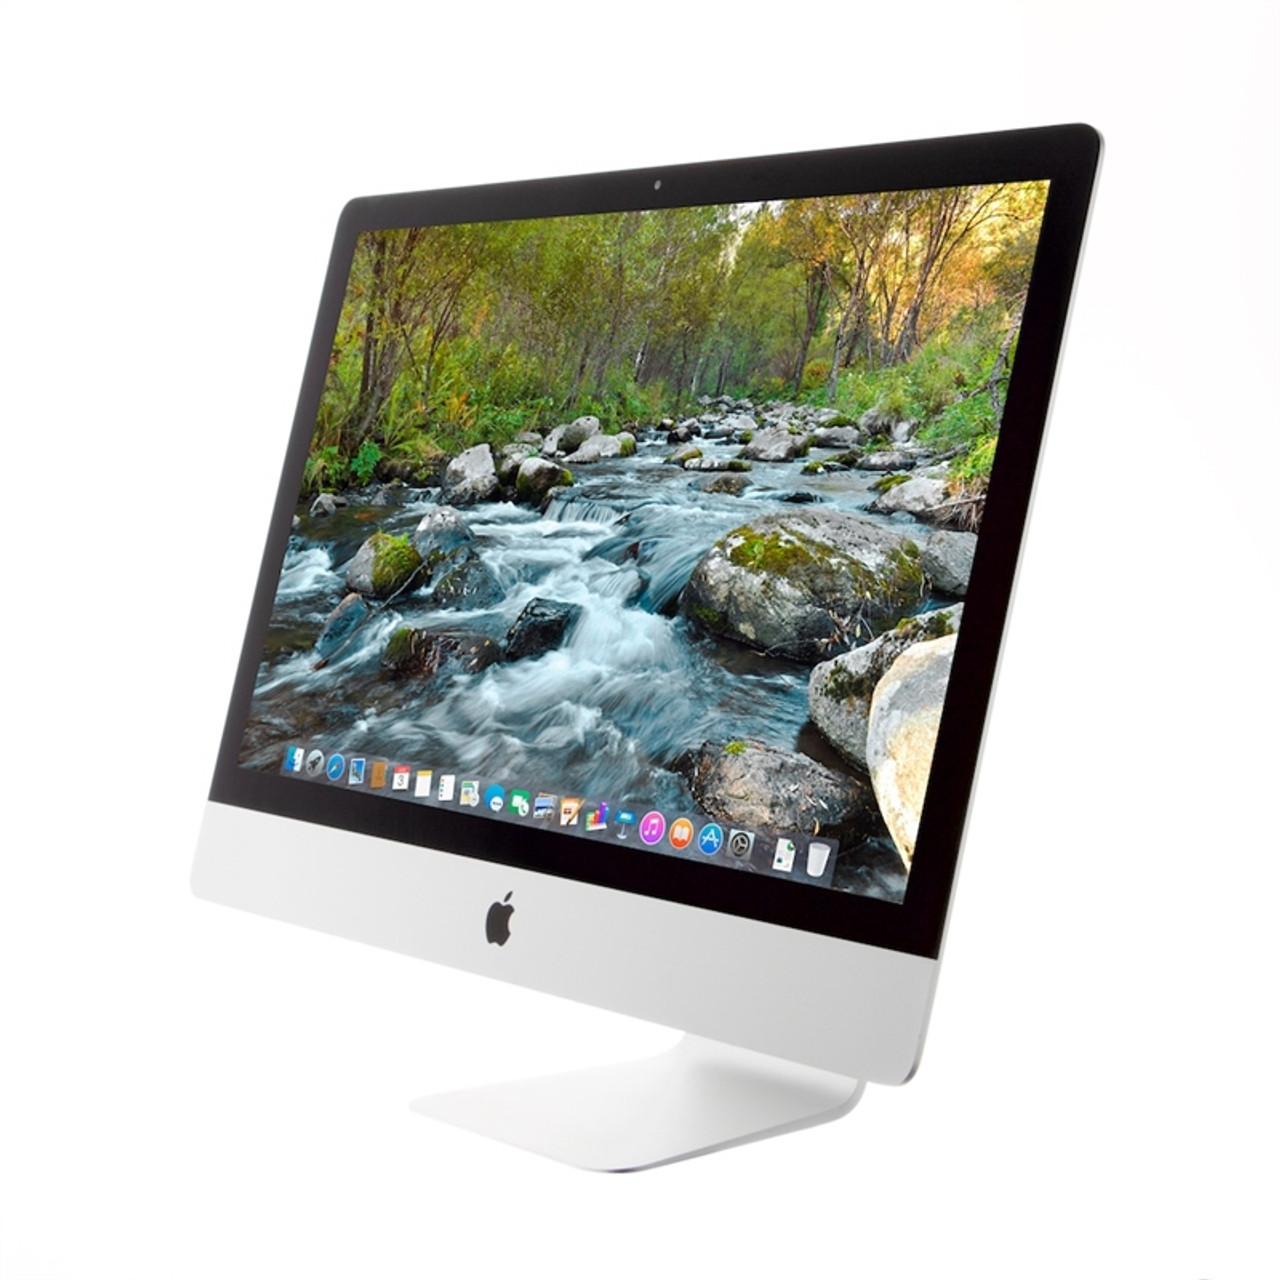 Ethernet Port*: Apple iMac Retina 5K  inch 3.2GHz Quad core i5 Late   MKLL/A